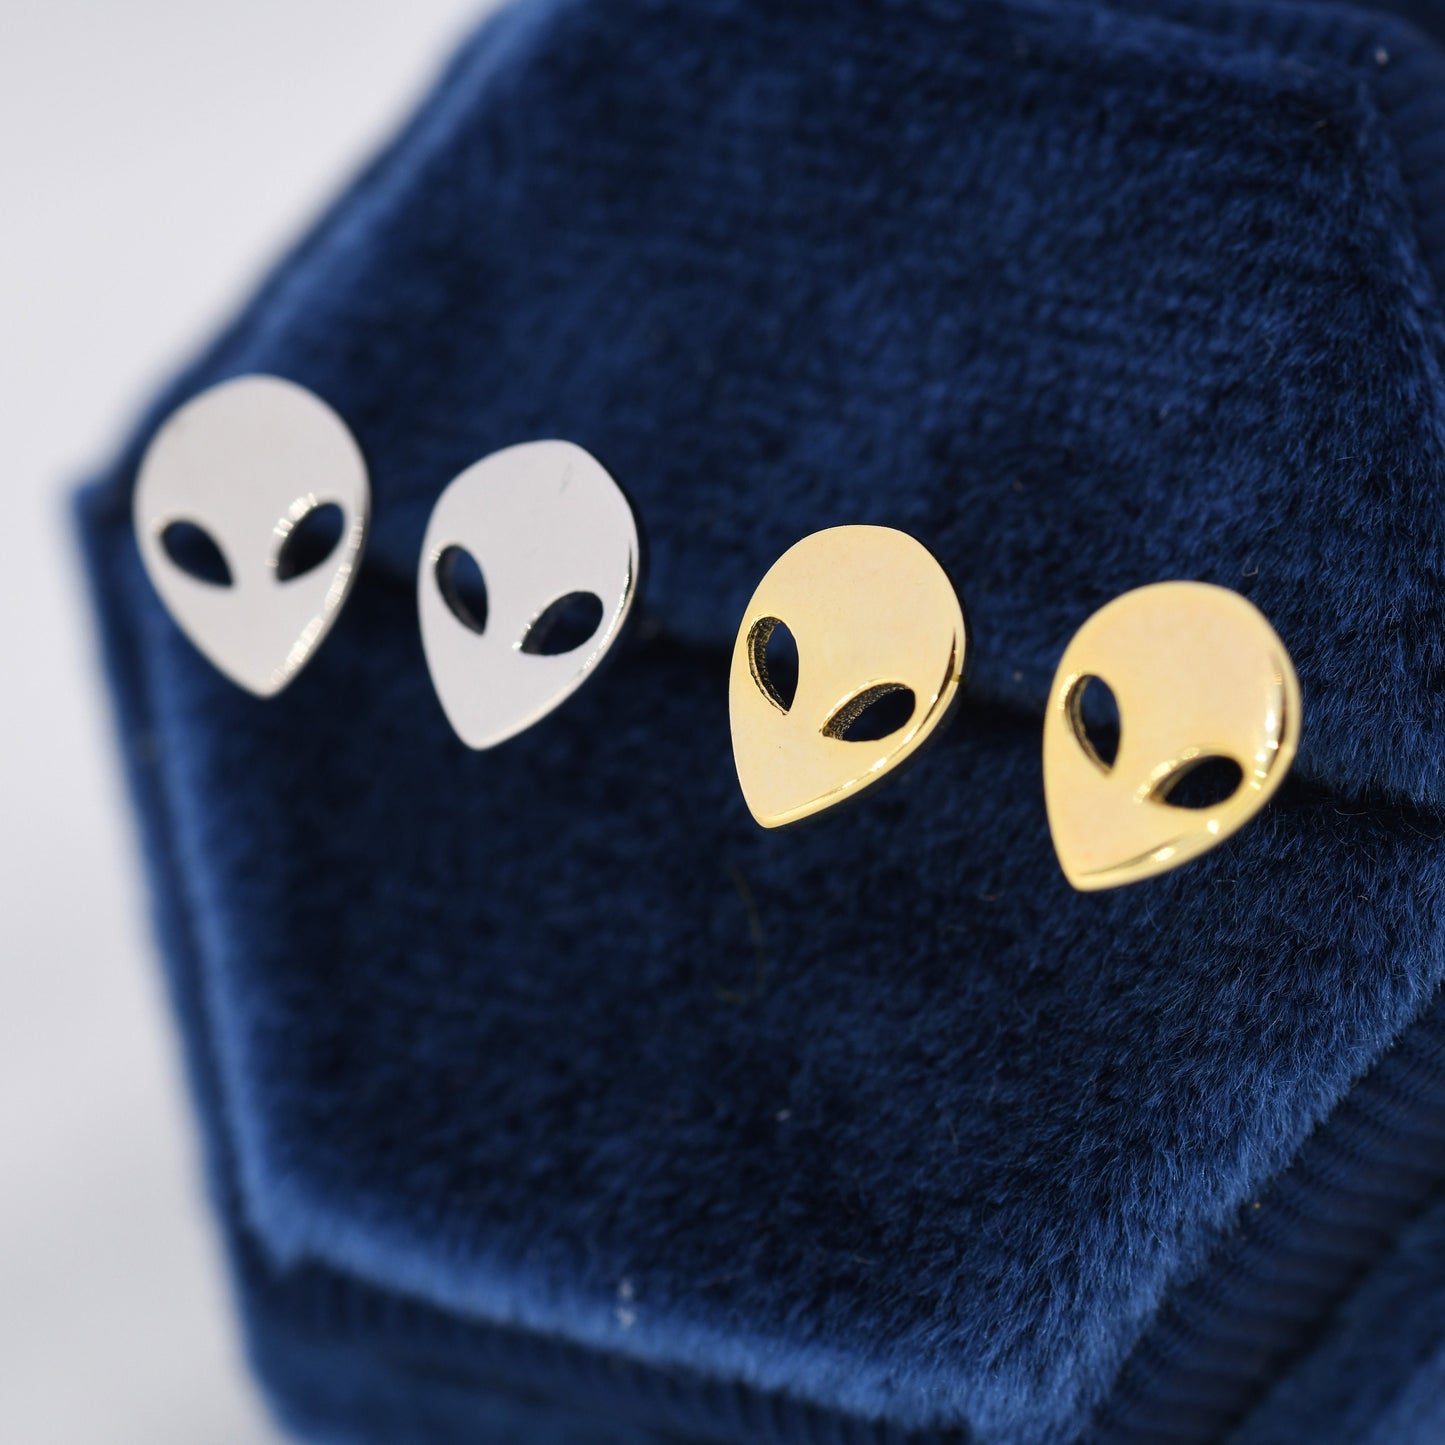 Alien Stud Earrings in Sterling Silver, Silver or Gold, UFO Earrings, Fun and Quirky Jewellery